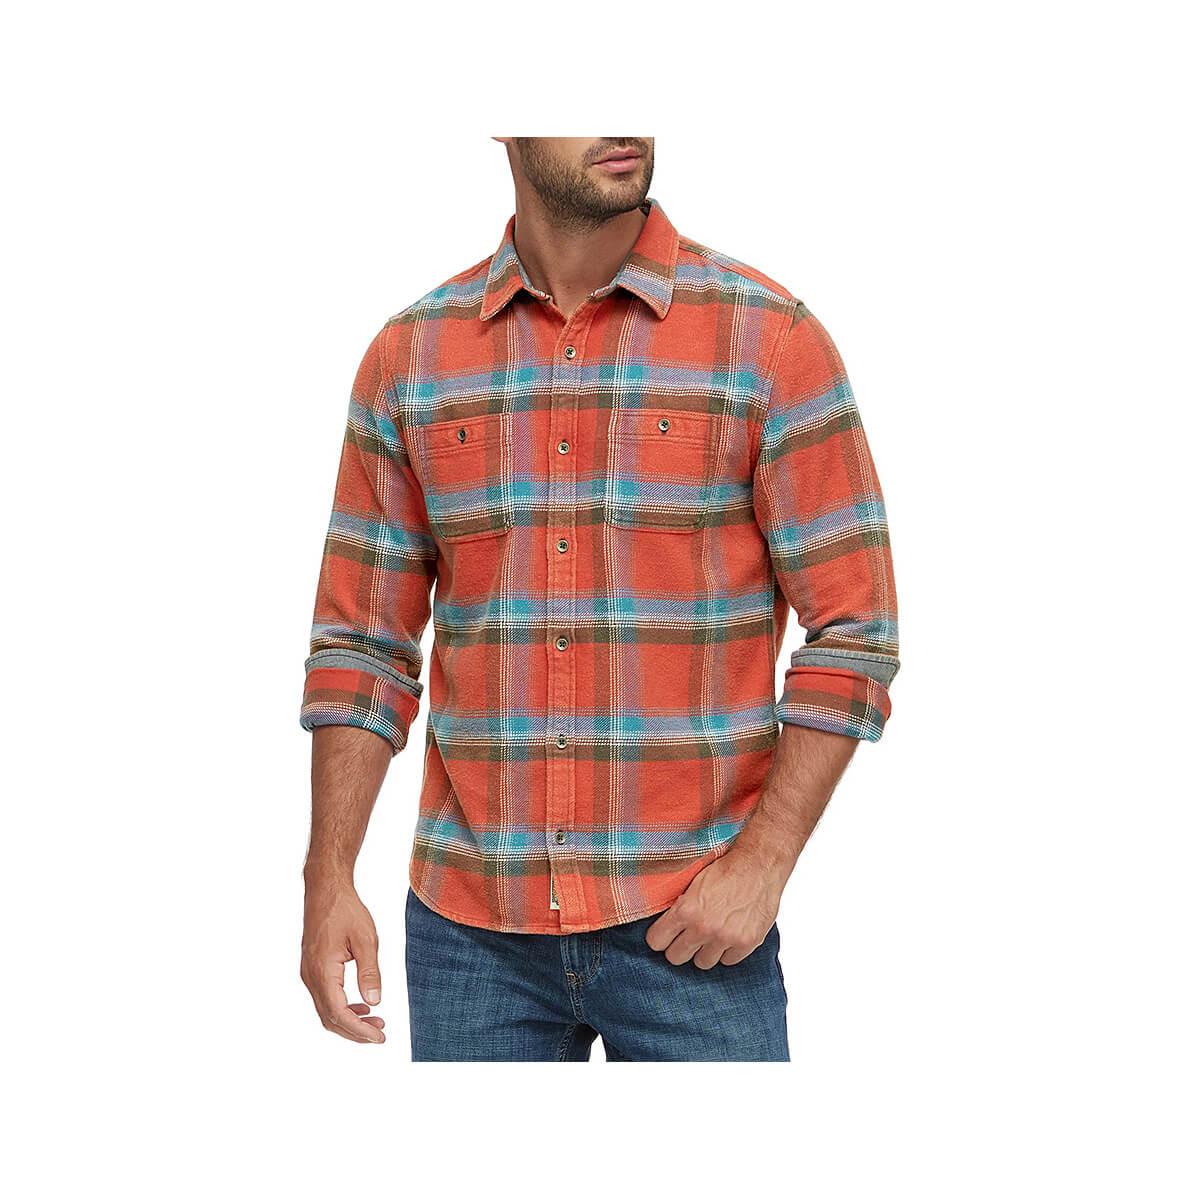  Men's Larkspur Flannel Shirt